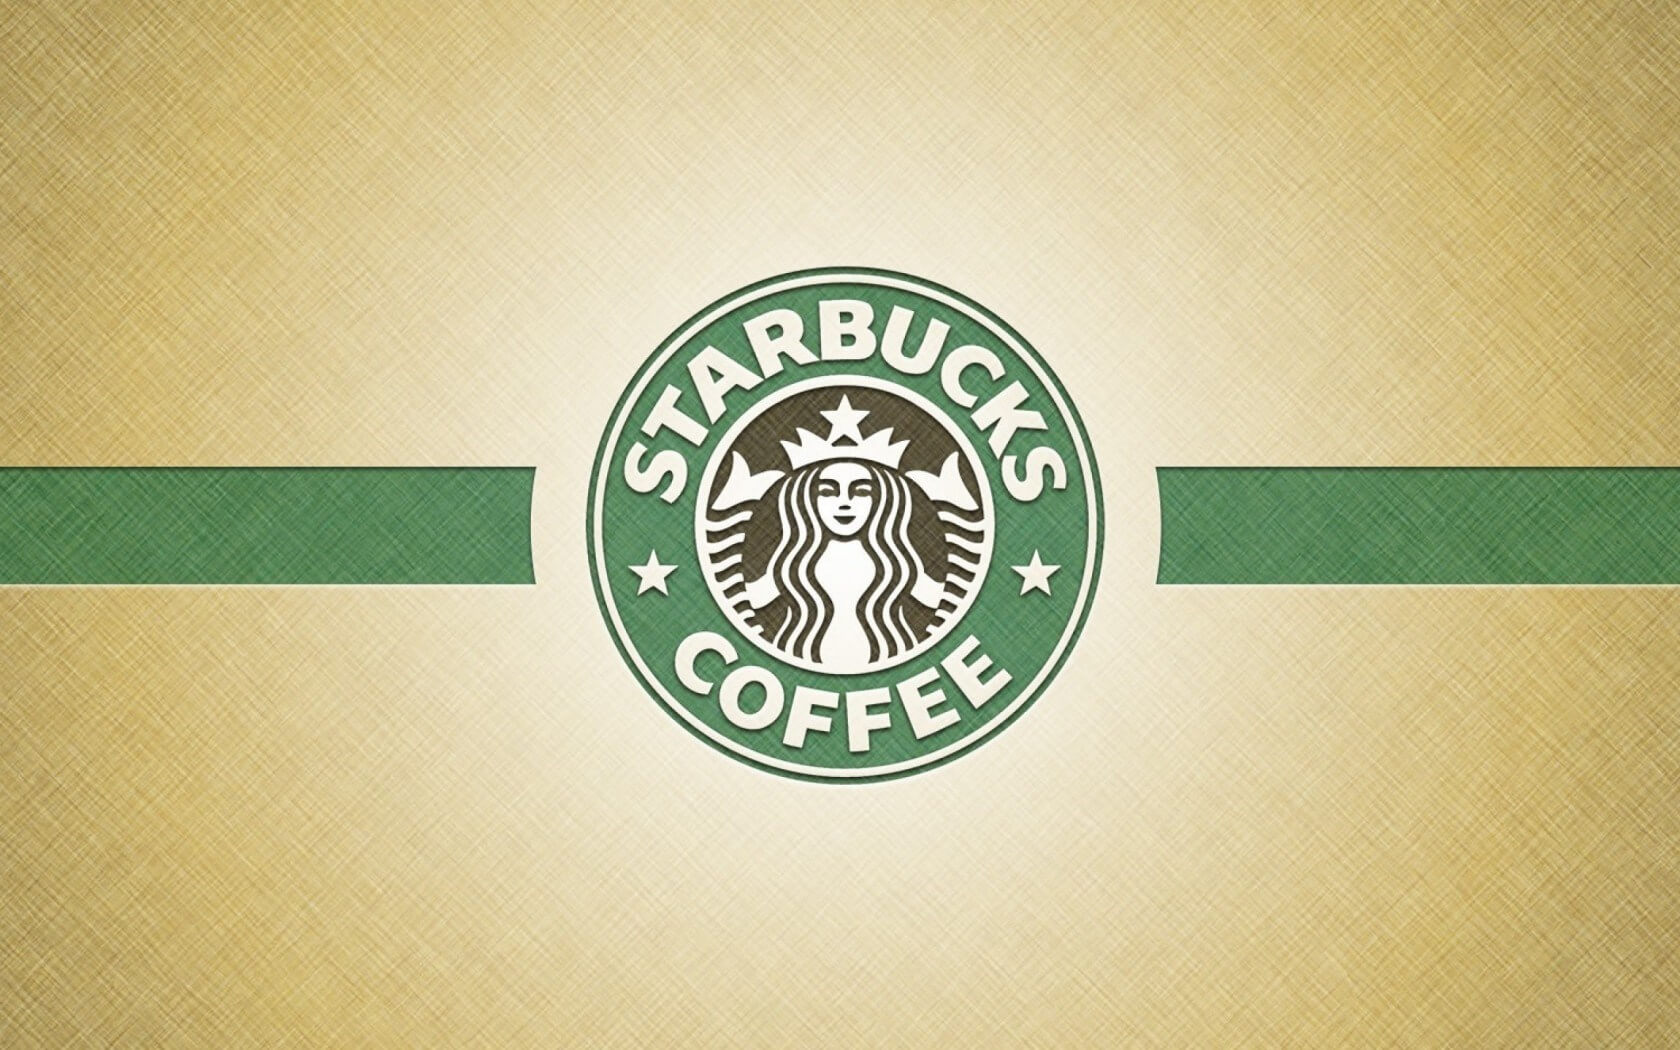 Starbucks Ppt Background - Powerpoint Backgrounds For Free Inside Starbucks Powerpoint Template